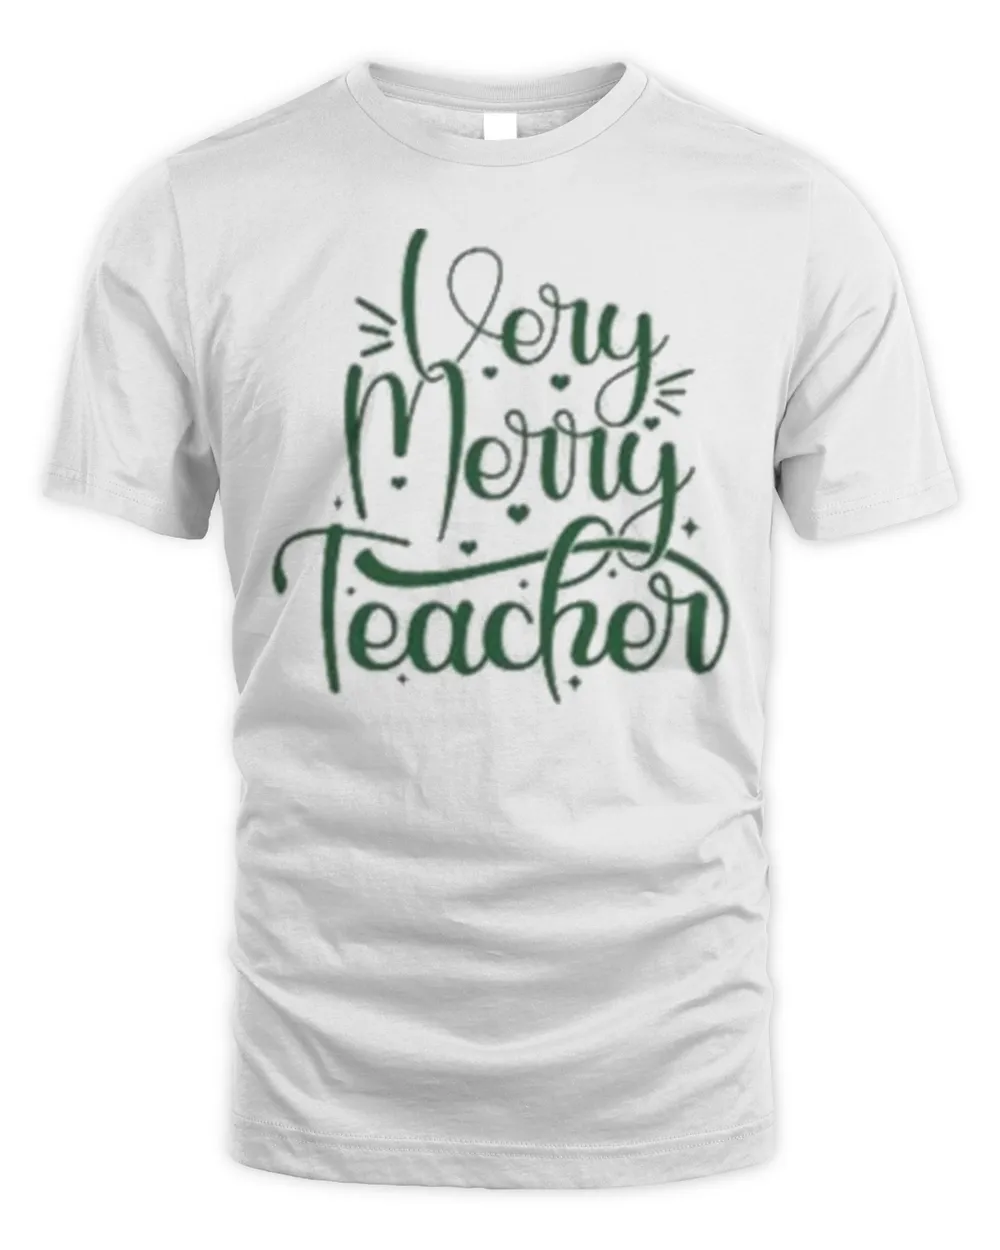 Very Merry Teacher Back to School Merry Christmas shirt